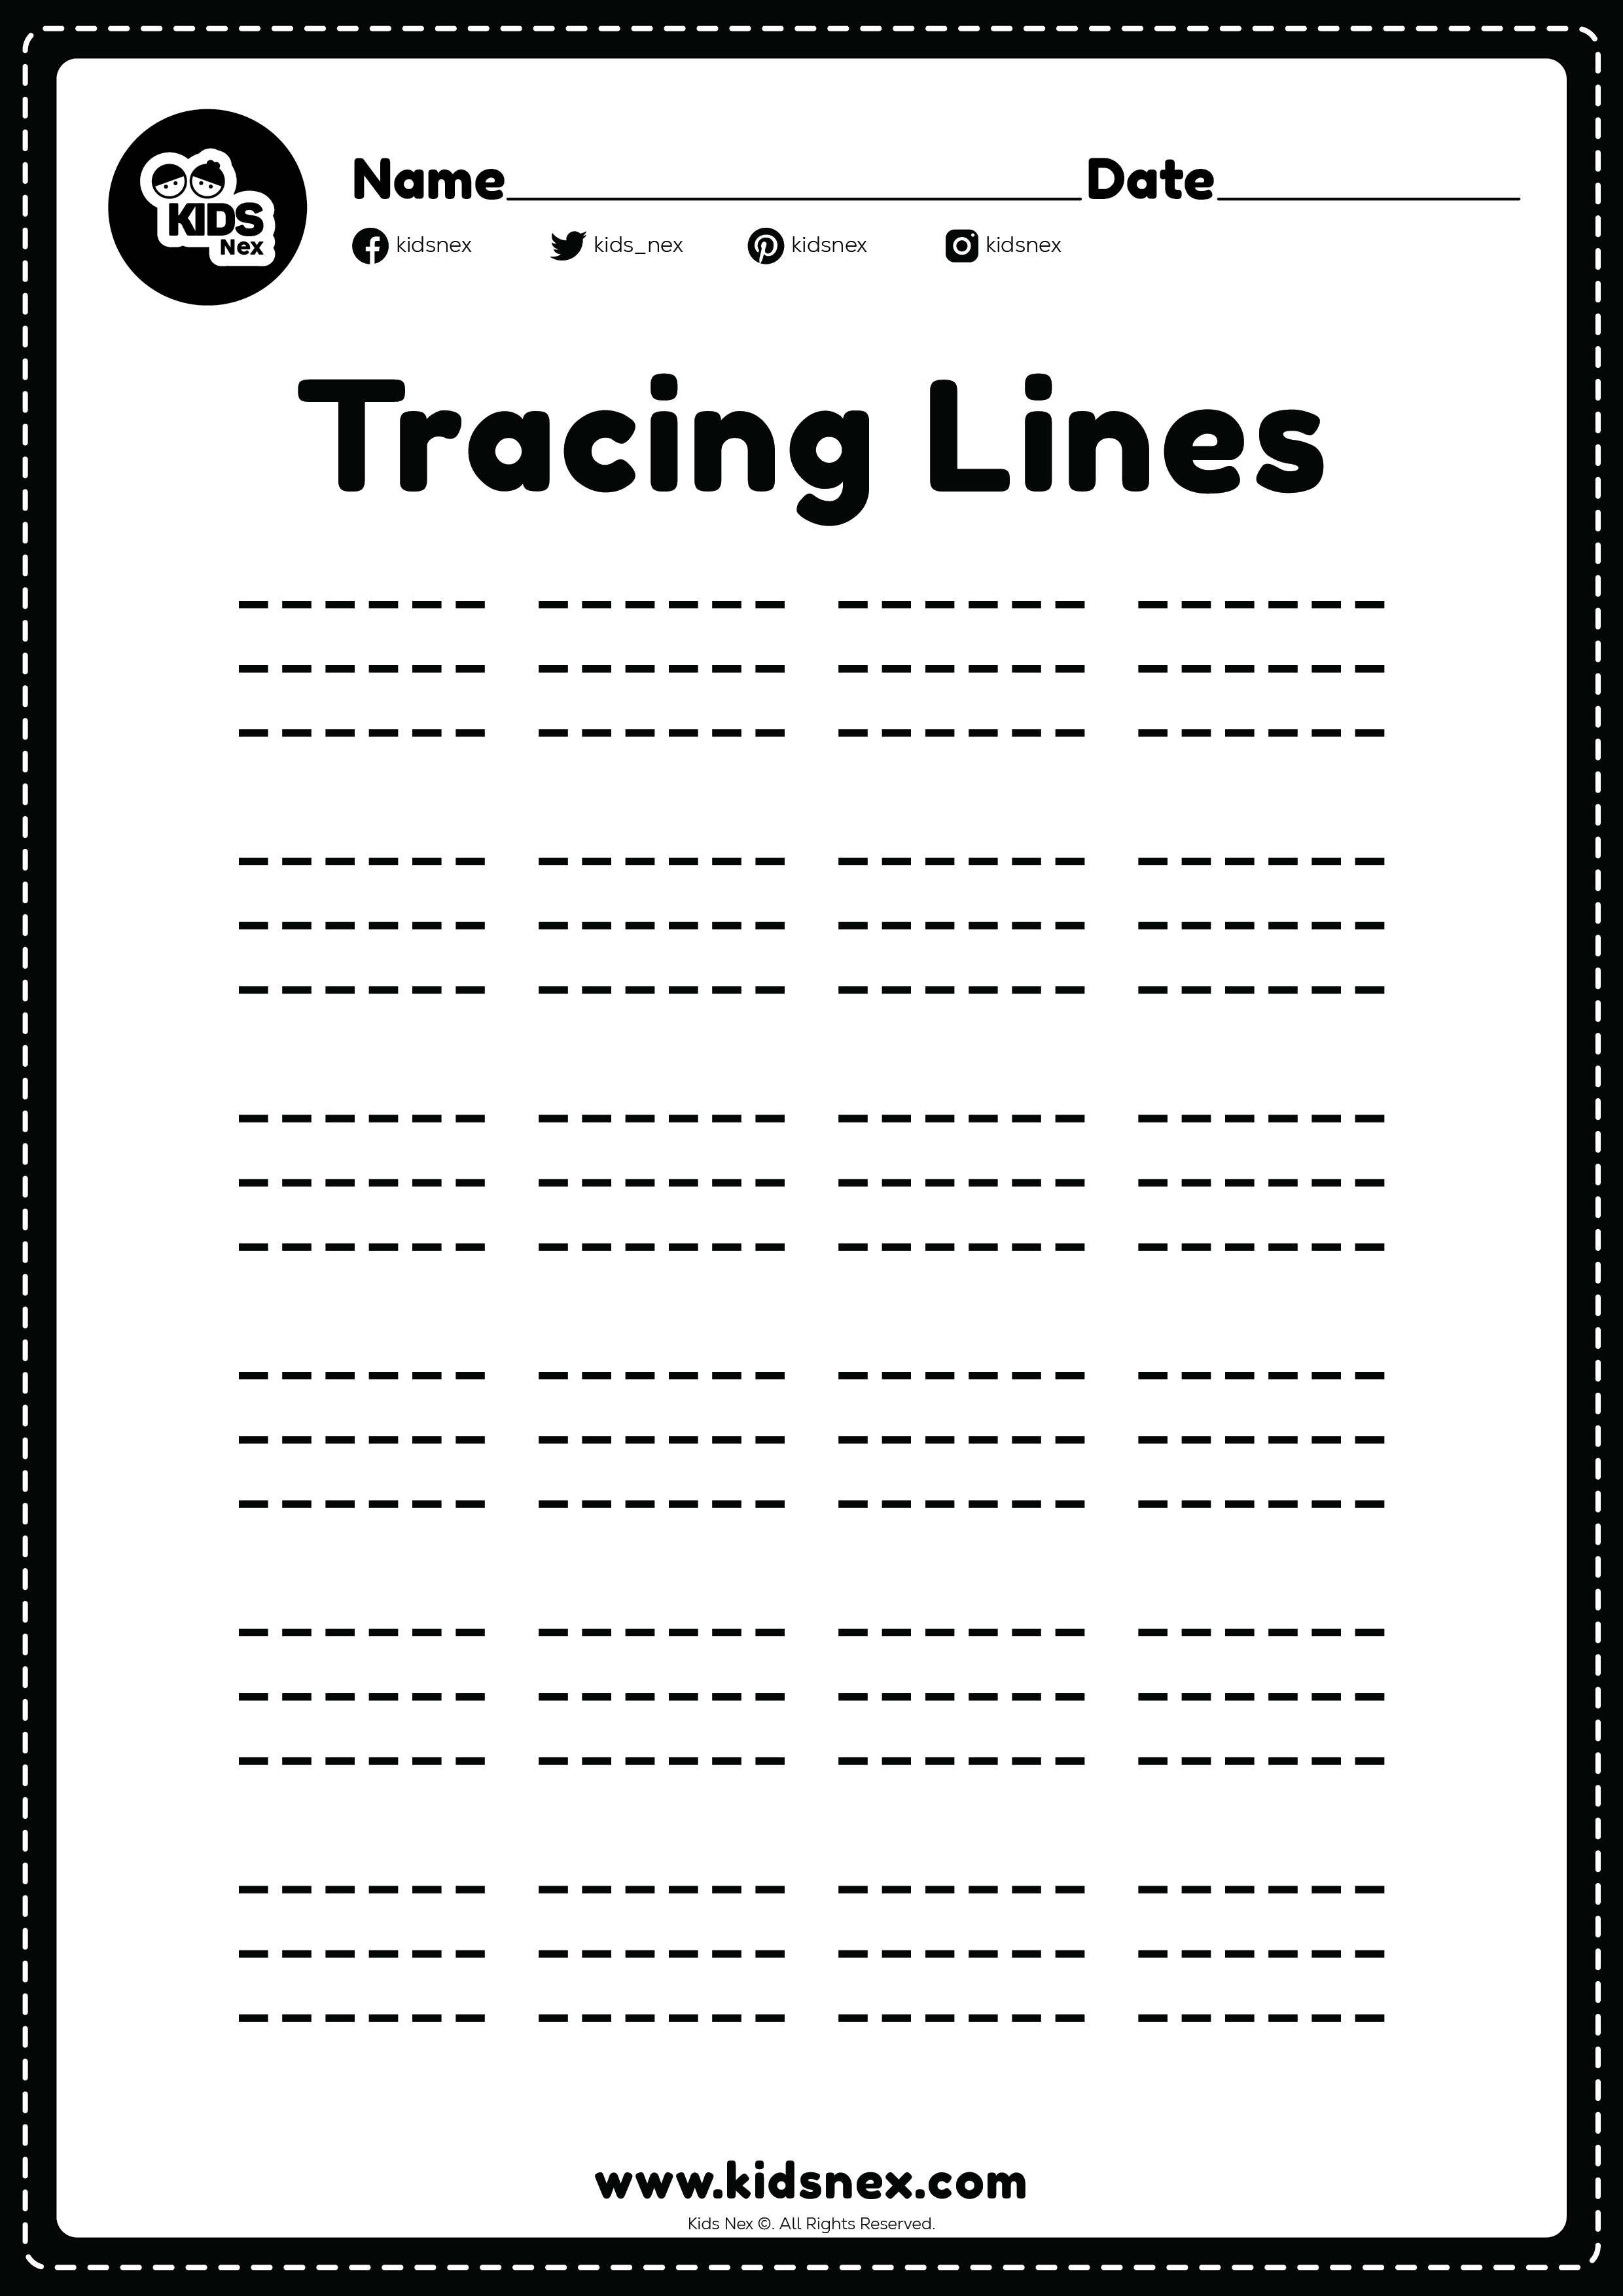 Sleeping line worksheet tracing practice for kindergarten and preschoolers kids for educational activities in a free printable